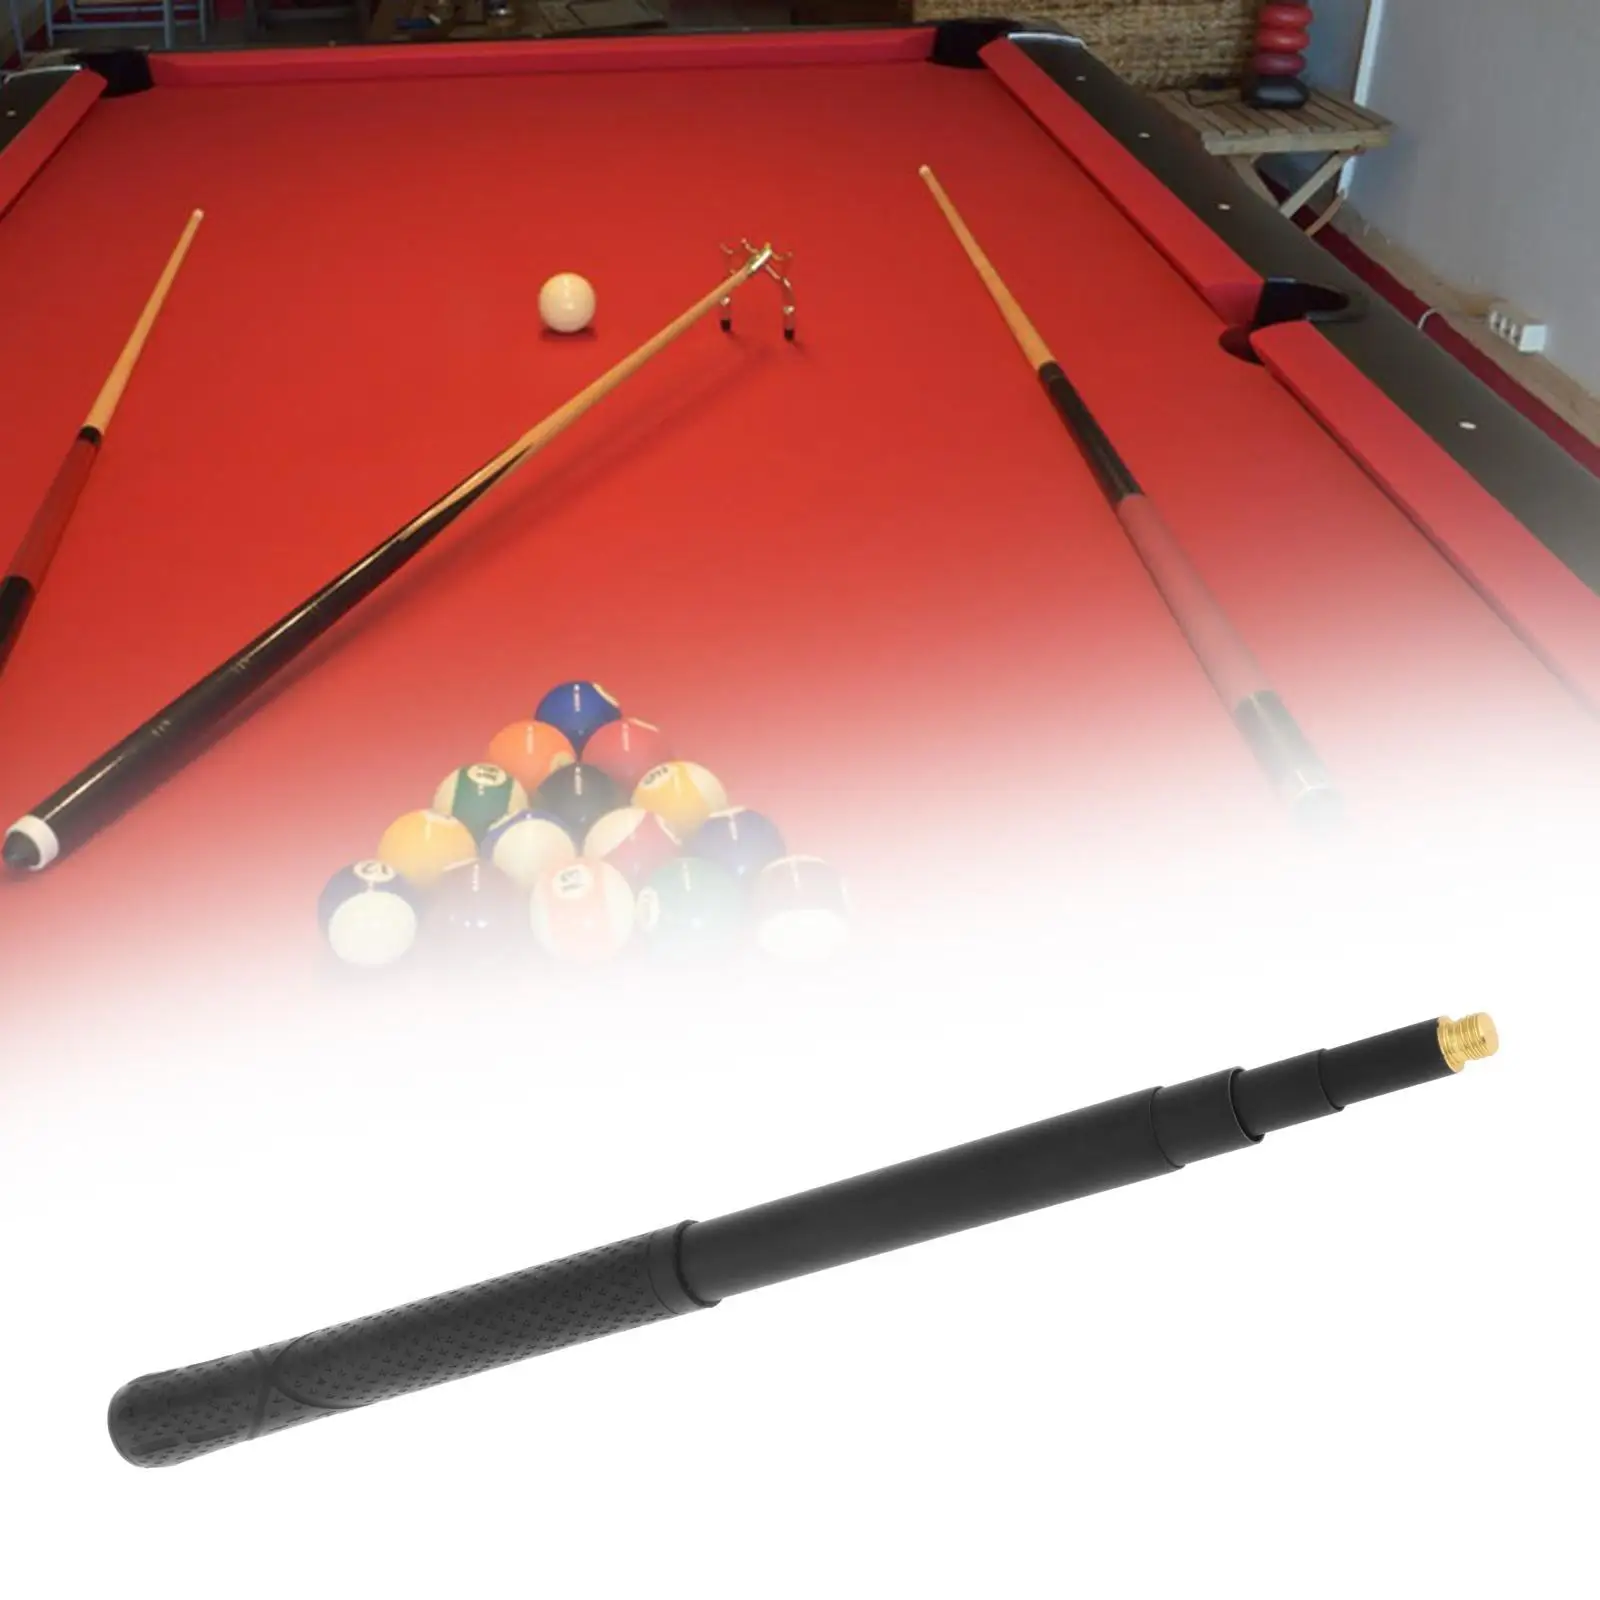 Pool Cue Bridge Sticks Extendable Portable Billiards Cue Sticks Pool Cue Sticks for Pool Table Snooker Training Accessories